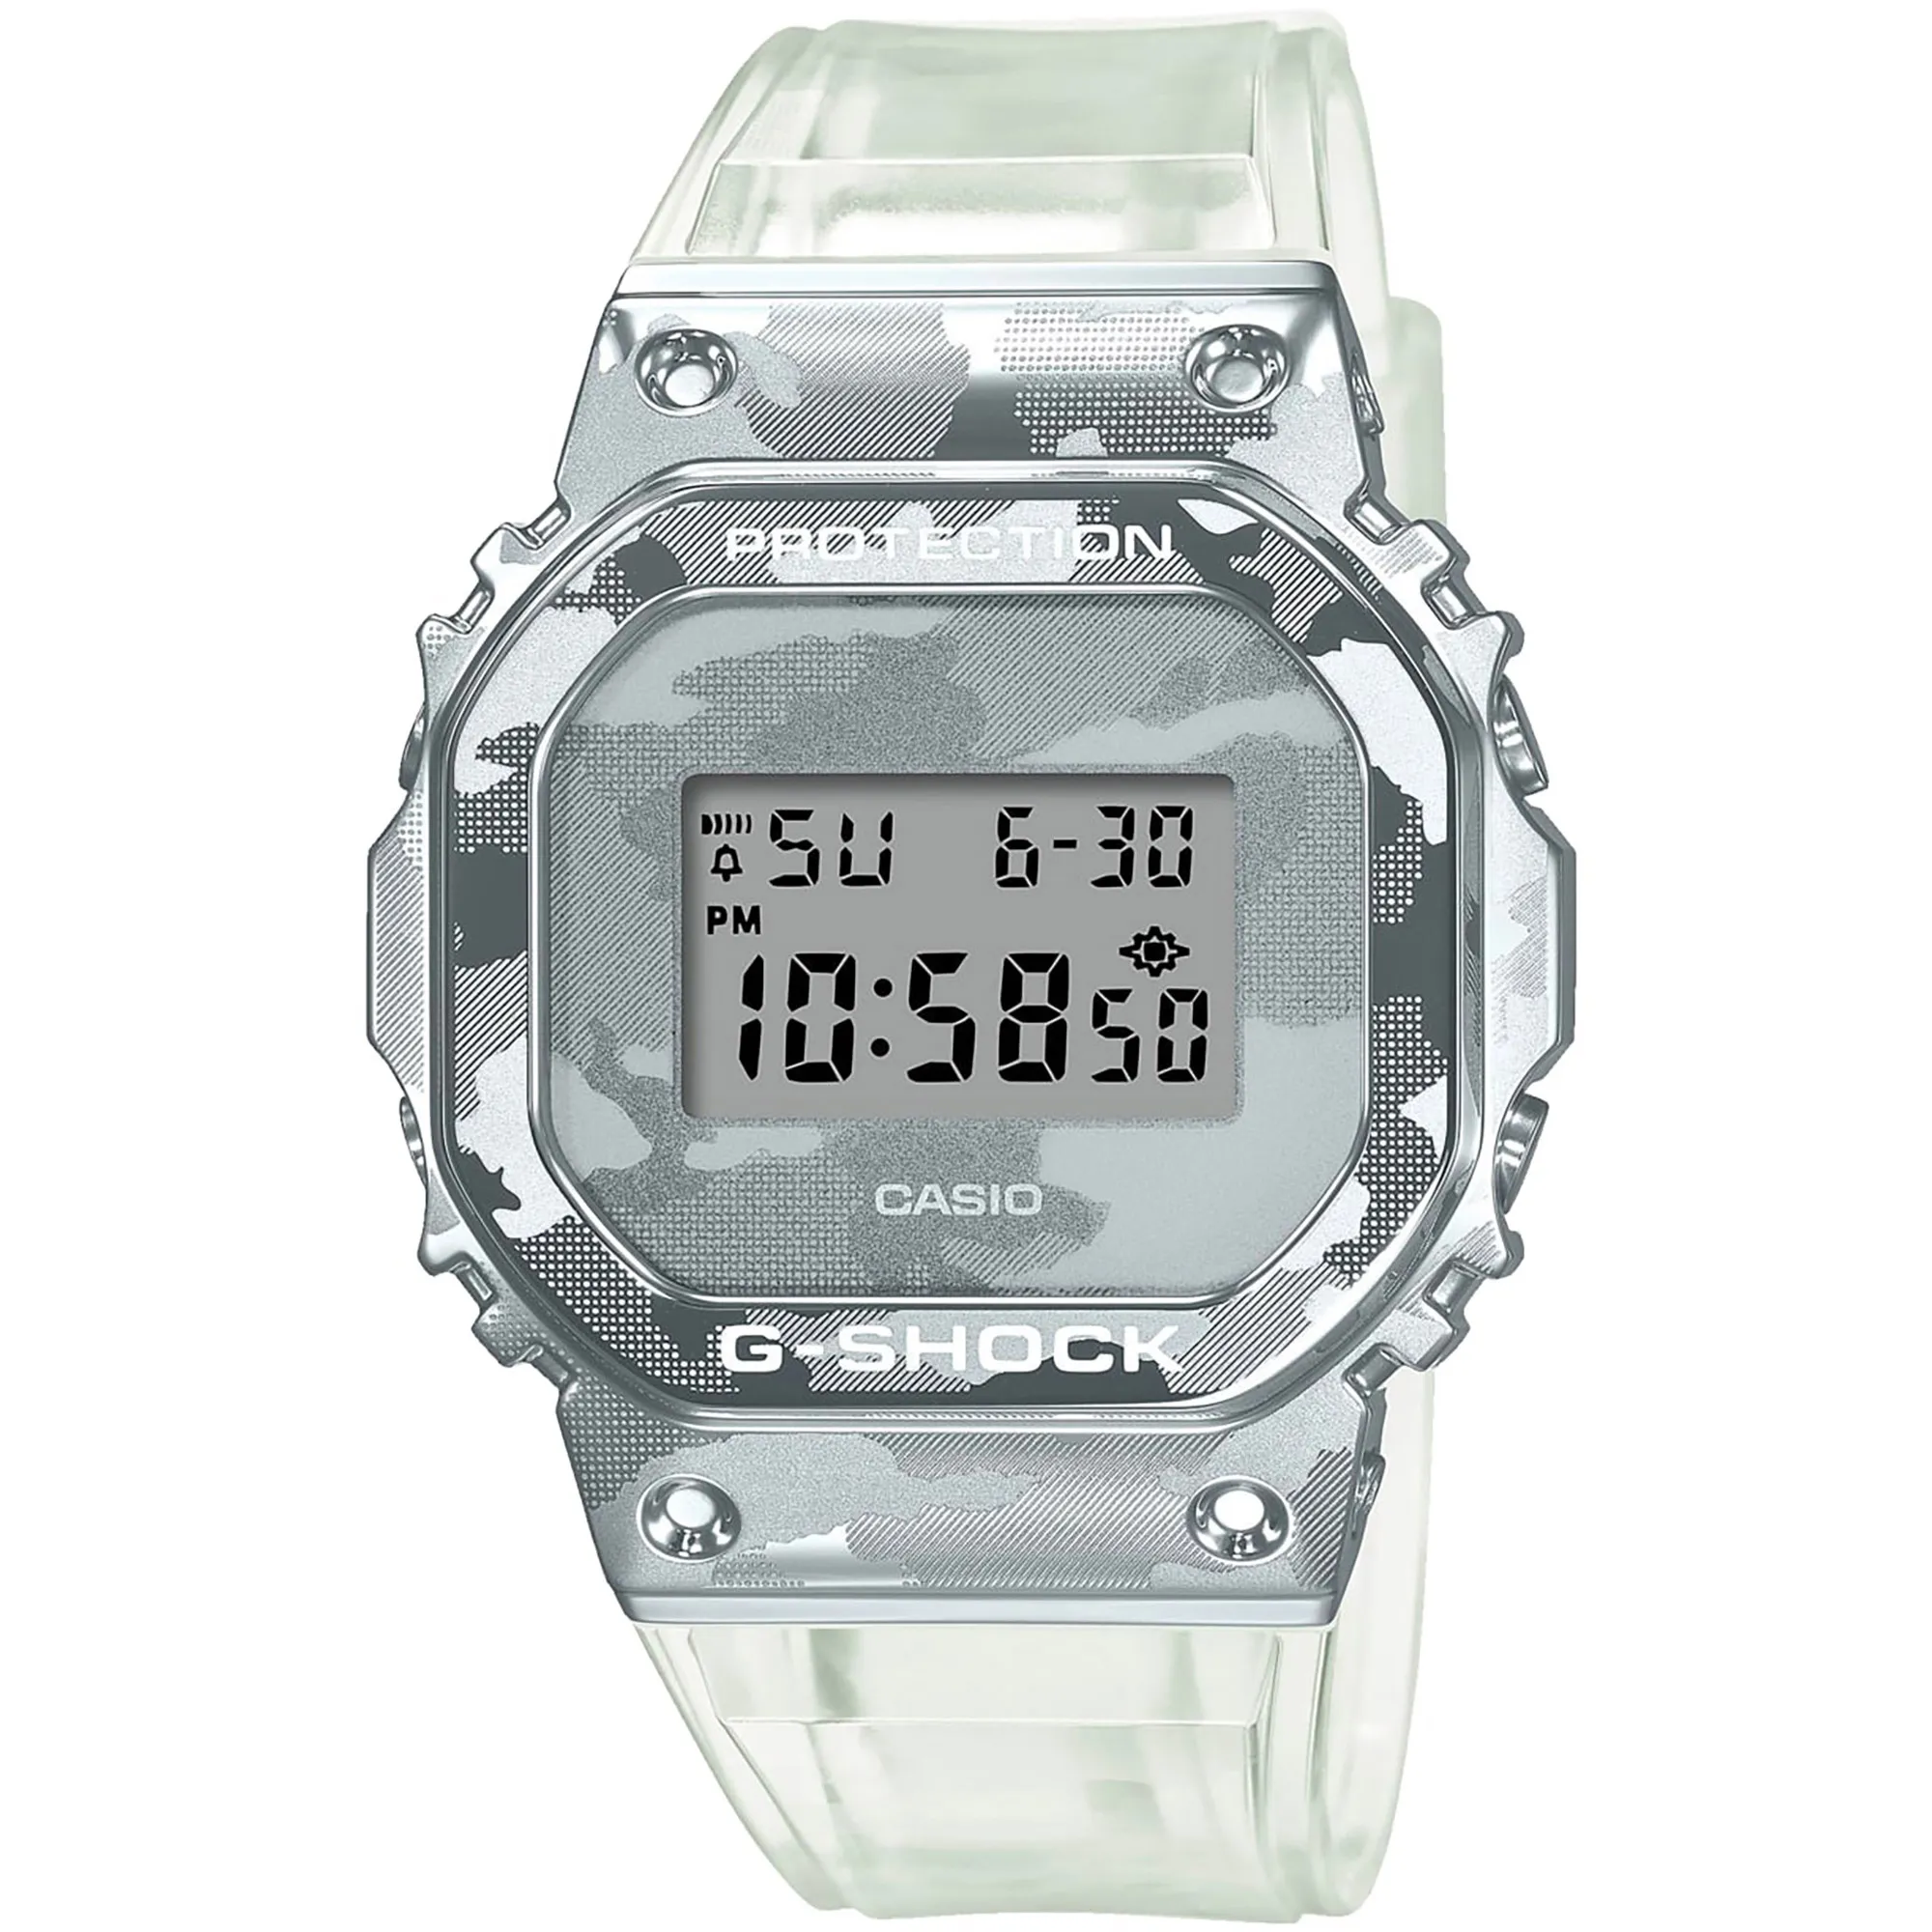 Watch CASIO G-Shock gm-5600scm-1er